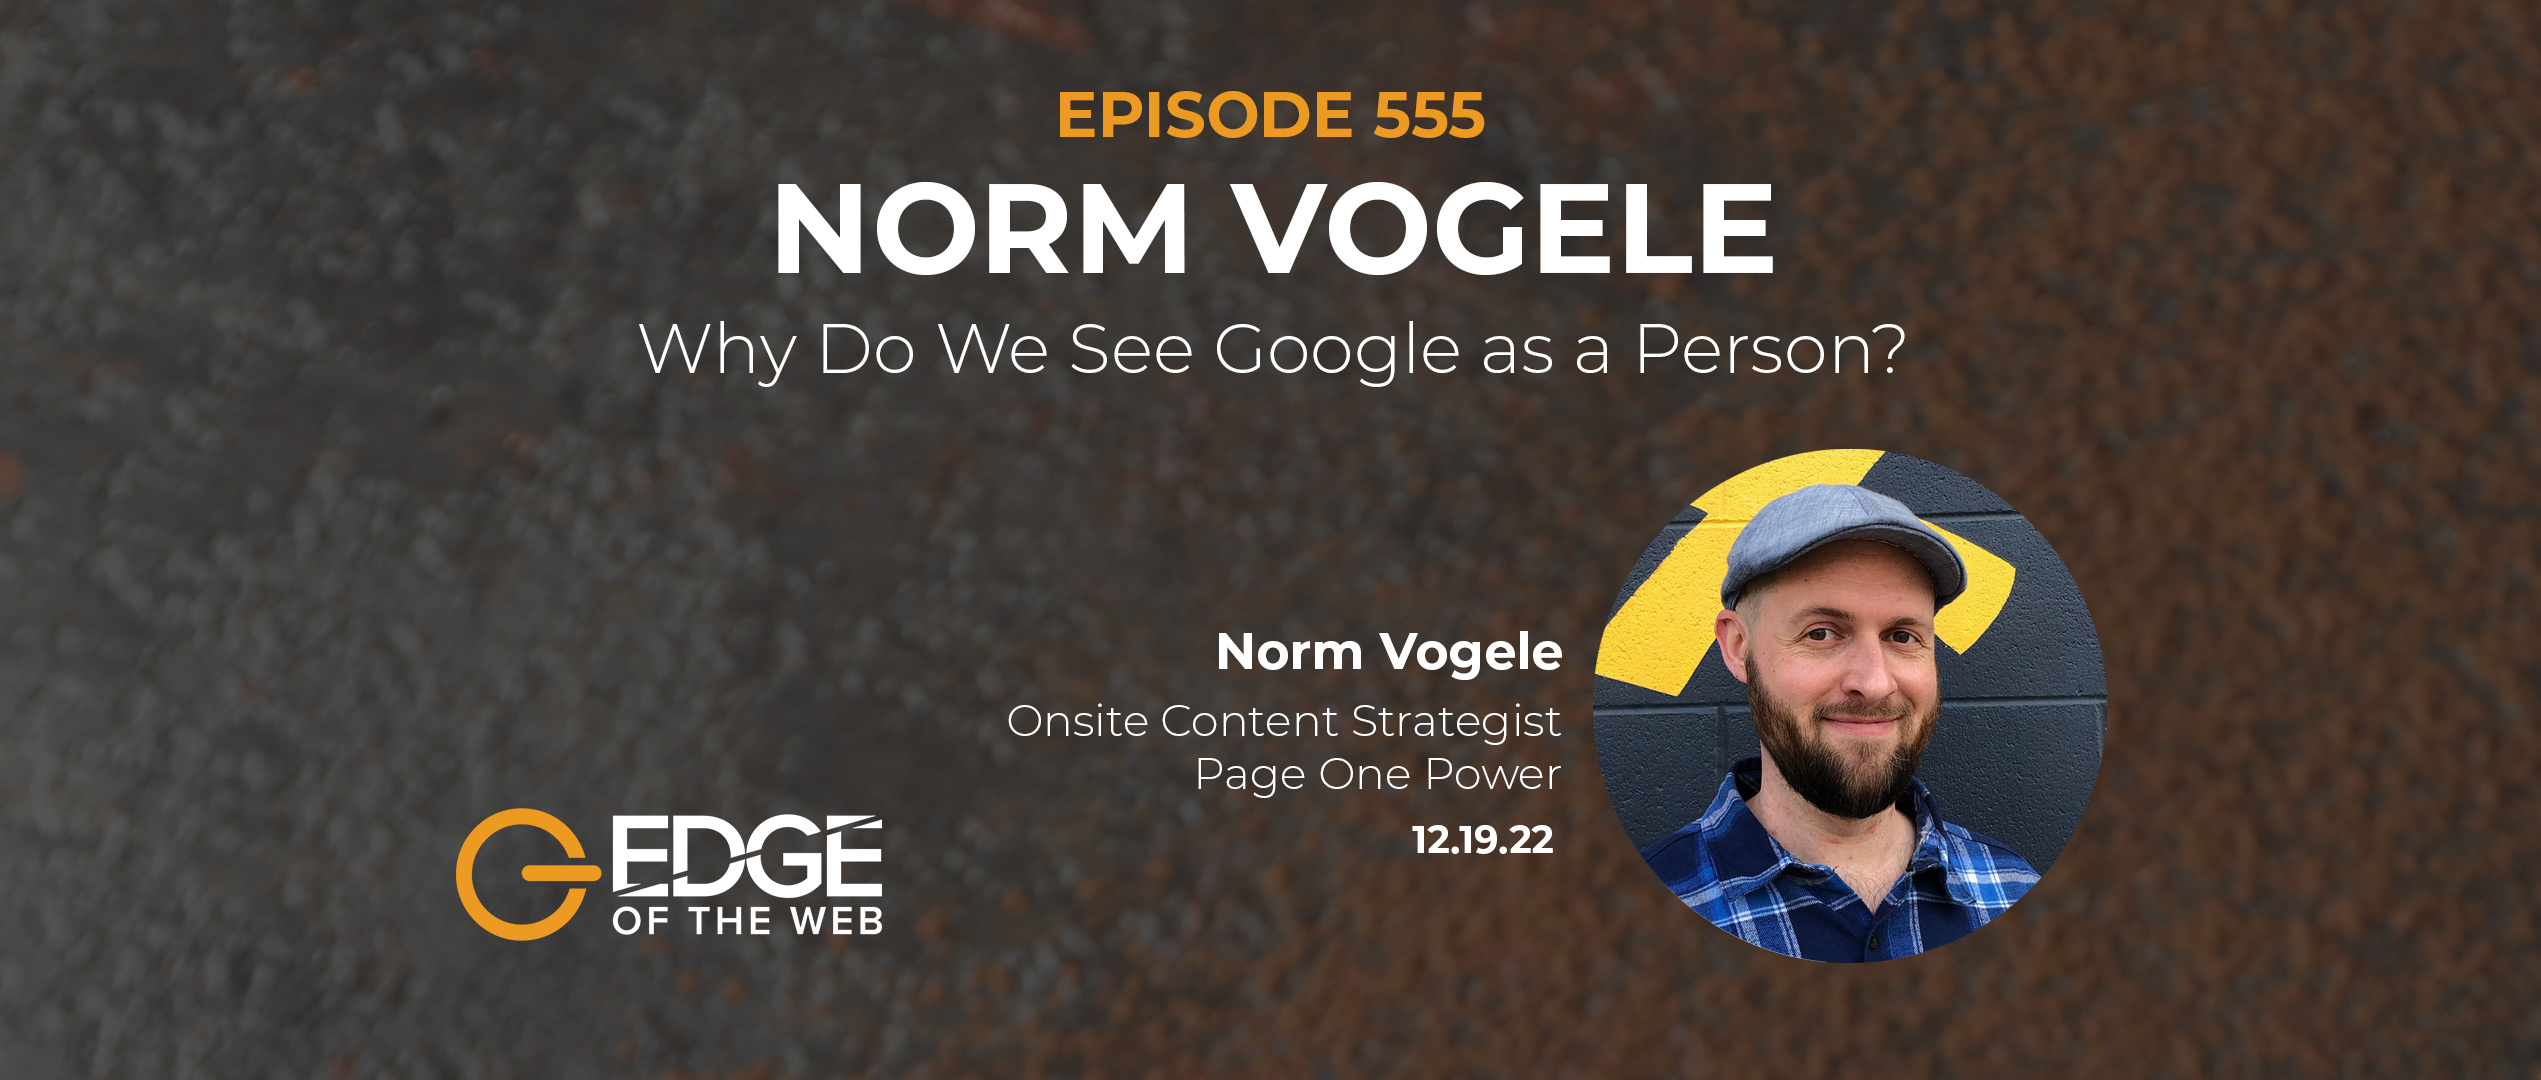 Norm Vogele EDGE Episode 555 Featured Image